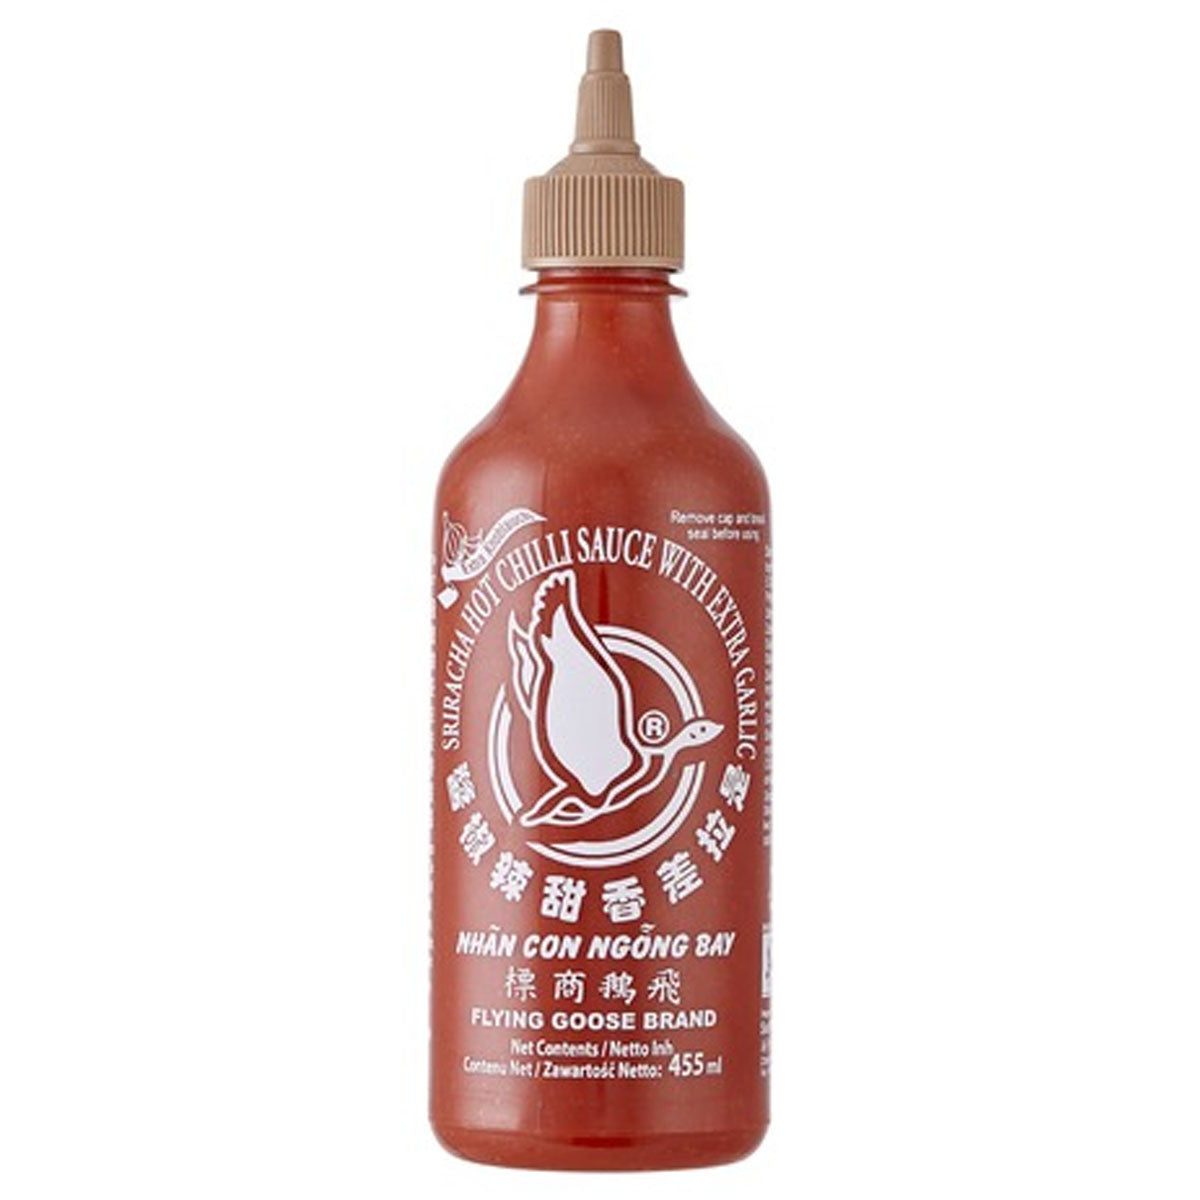 A bottle of Flying Goose - Sriracha Hot Chilli Sauce - 455ml on a white background.